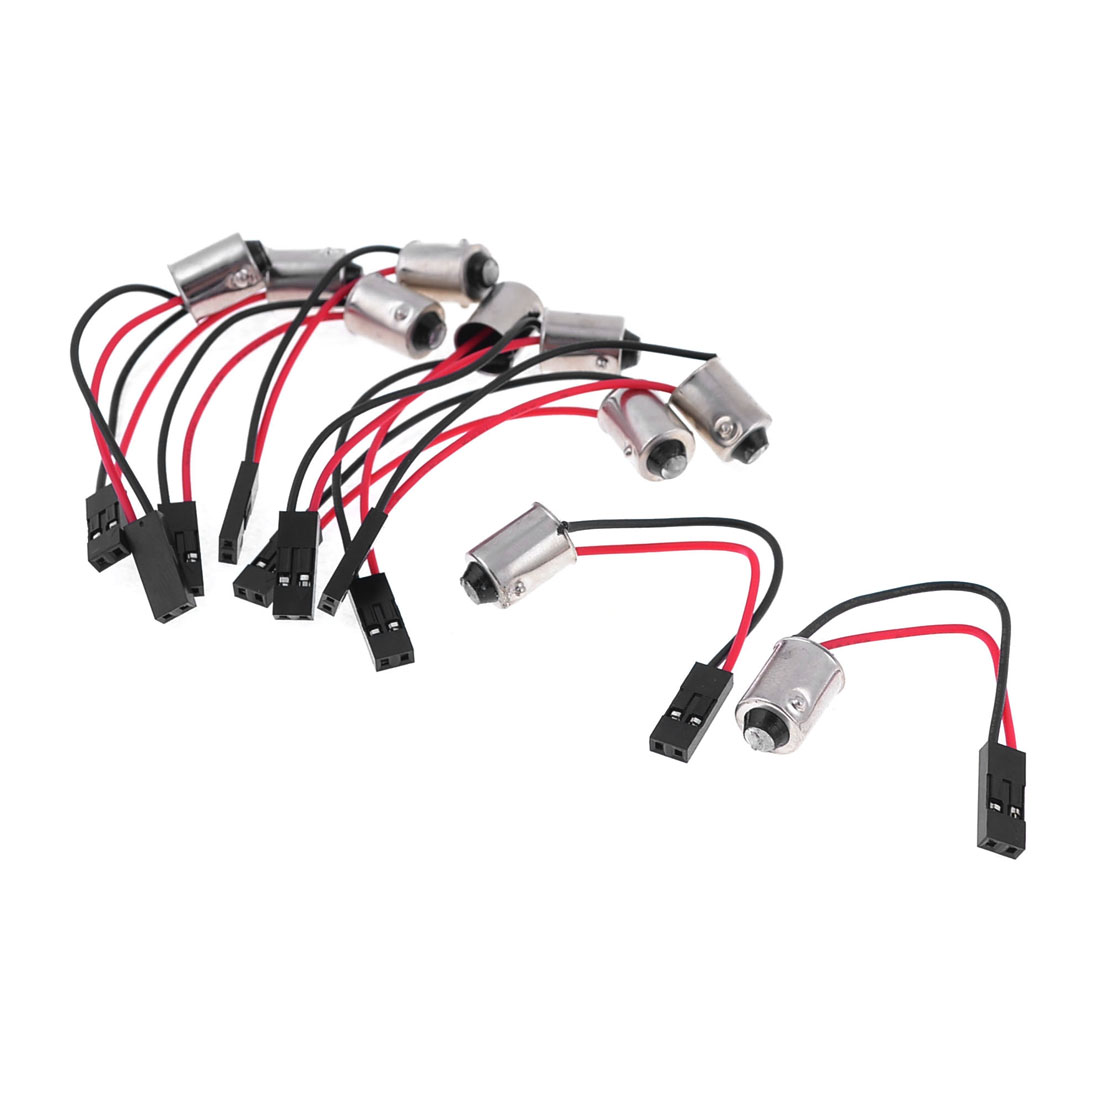 Unique Bargains 10pcs T10 BA9S LED Light Bulb Festoon Adapter Cable Cord Socket for Vehicle Auto